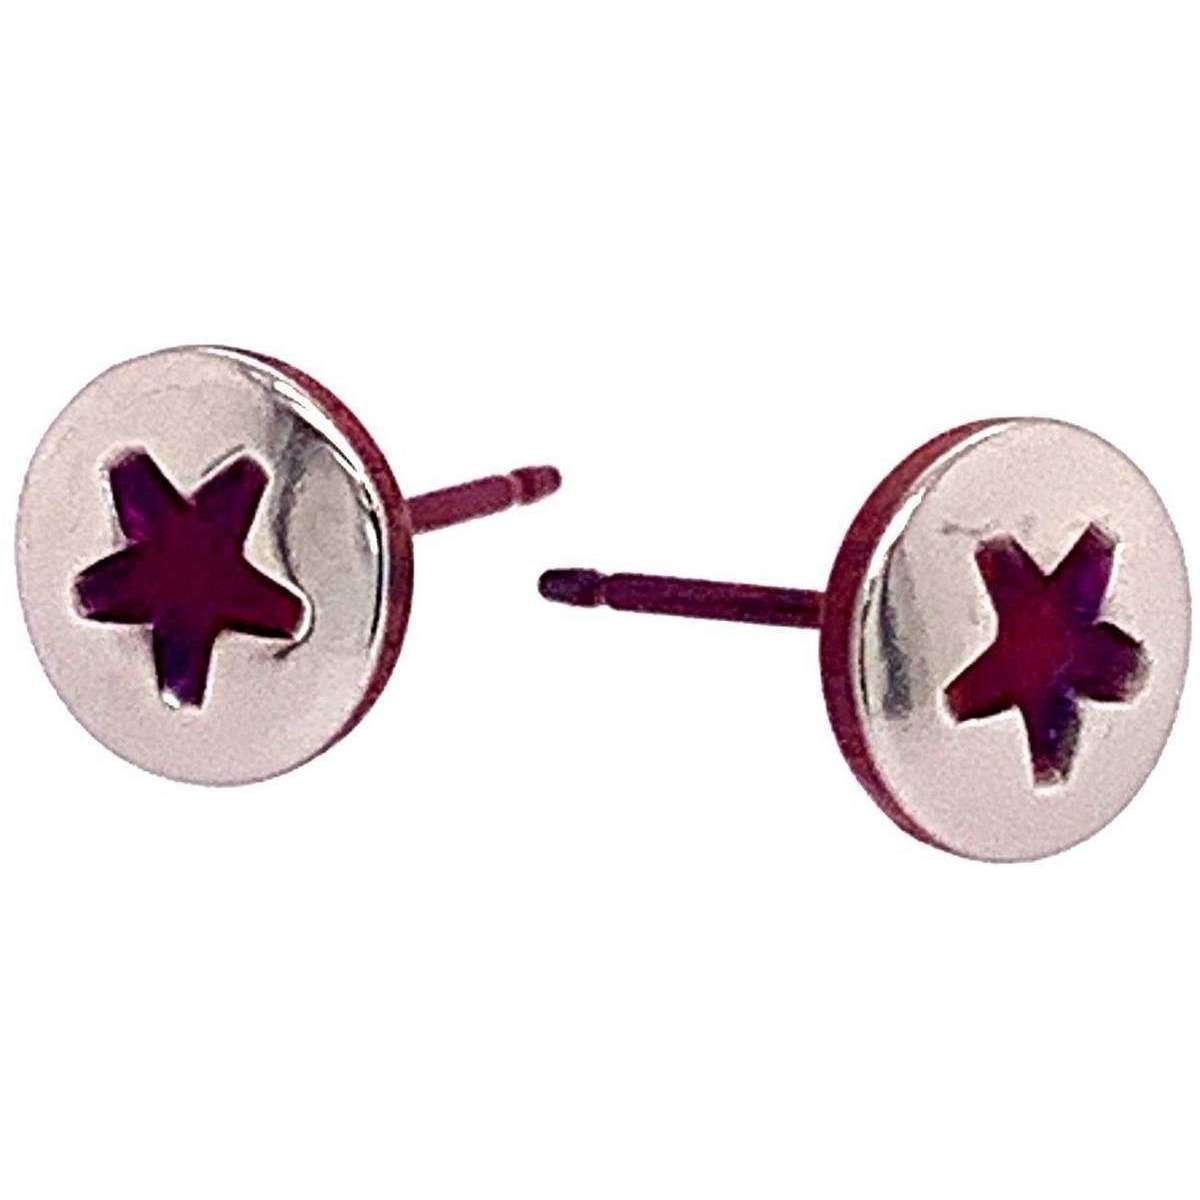 Ti2 Titanium Star Stud Earrings - Red